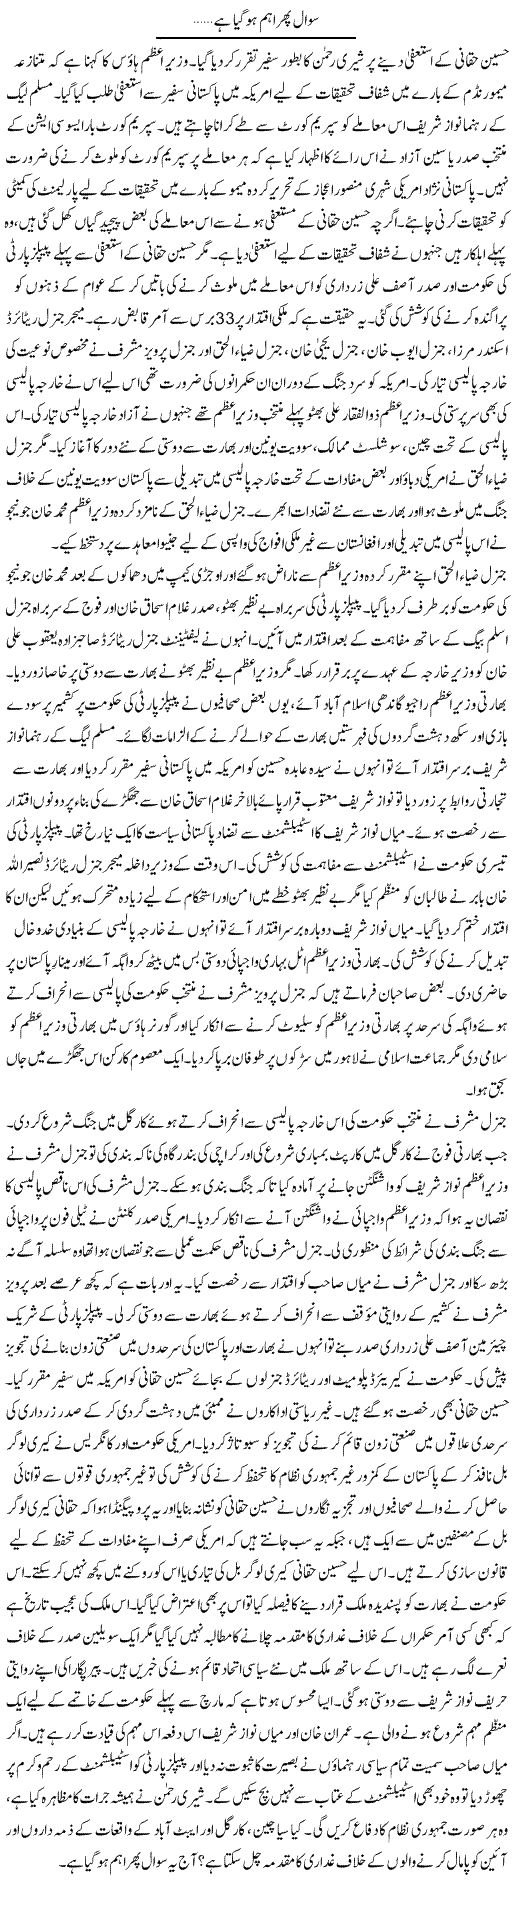 Husain Haqqani Express Column Tauseef Ahmed 27 November 2011